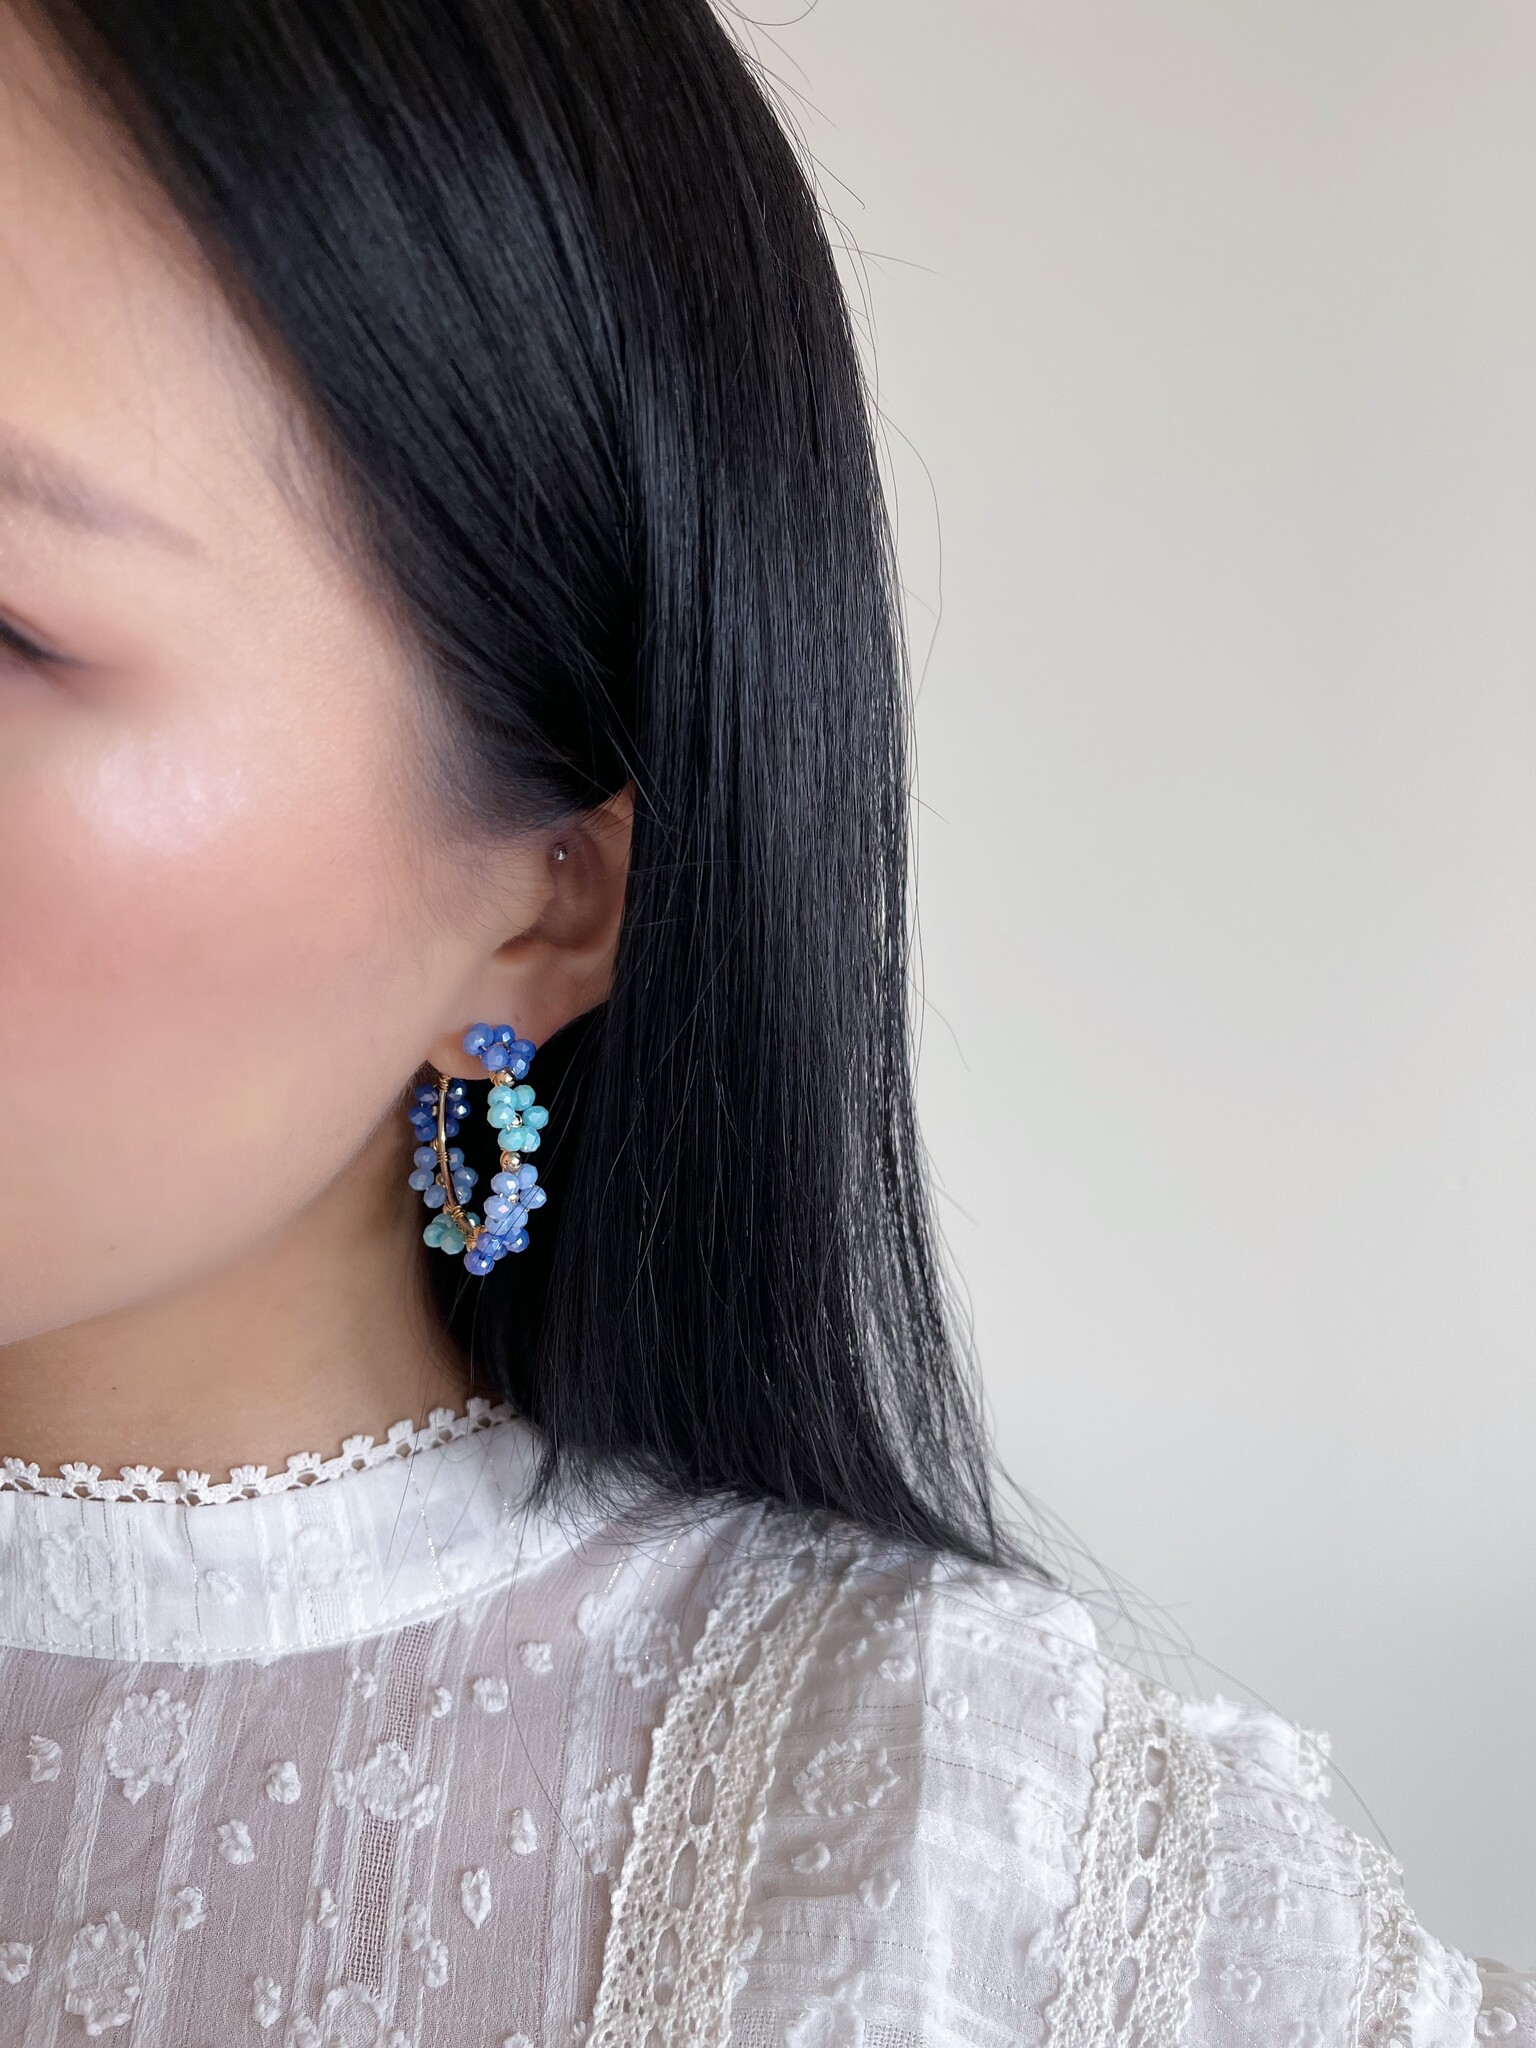 Beads Flower Pearl Hairband Hair Accessories For Women Wedding Accessories  Hair Hoop Hair Jewelry